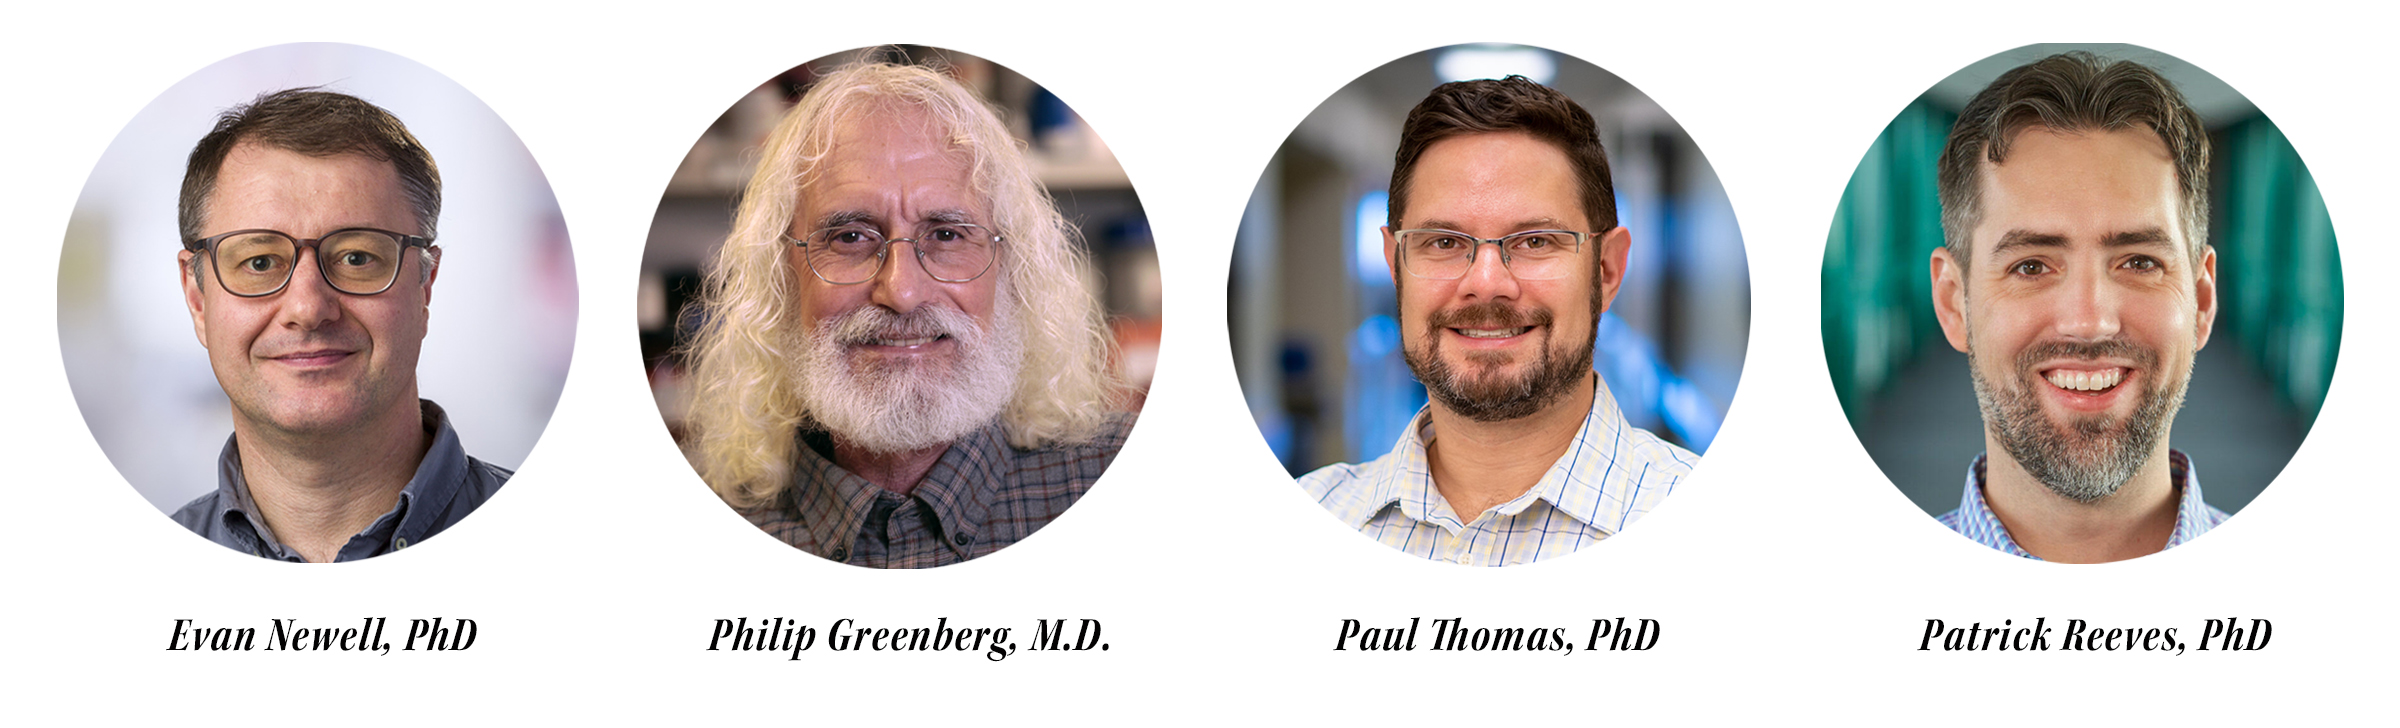 ImmunoScape Establishes Scientific Advisory Board of Distinguished Immunology Experts